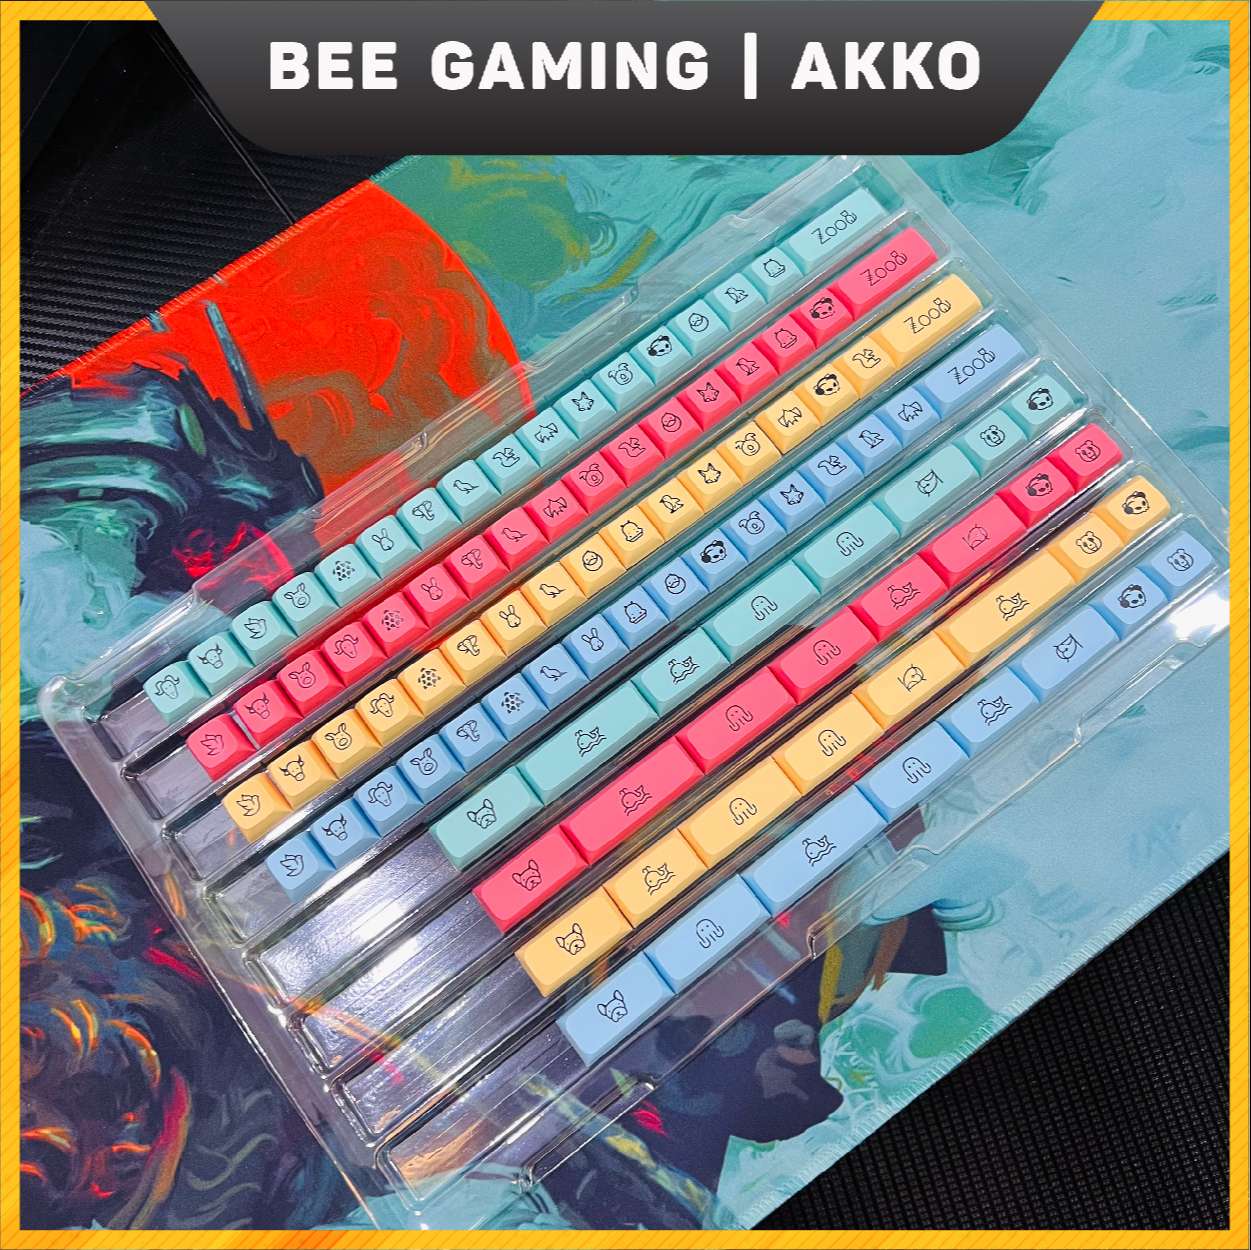 bo-keycap-akko-set-cream-mda-profile-282-nut-beegaming-4